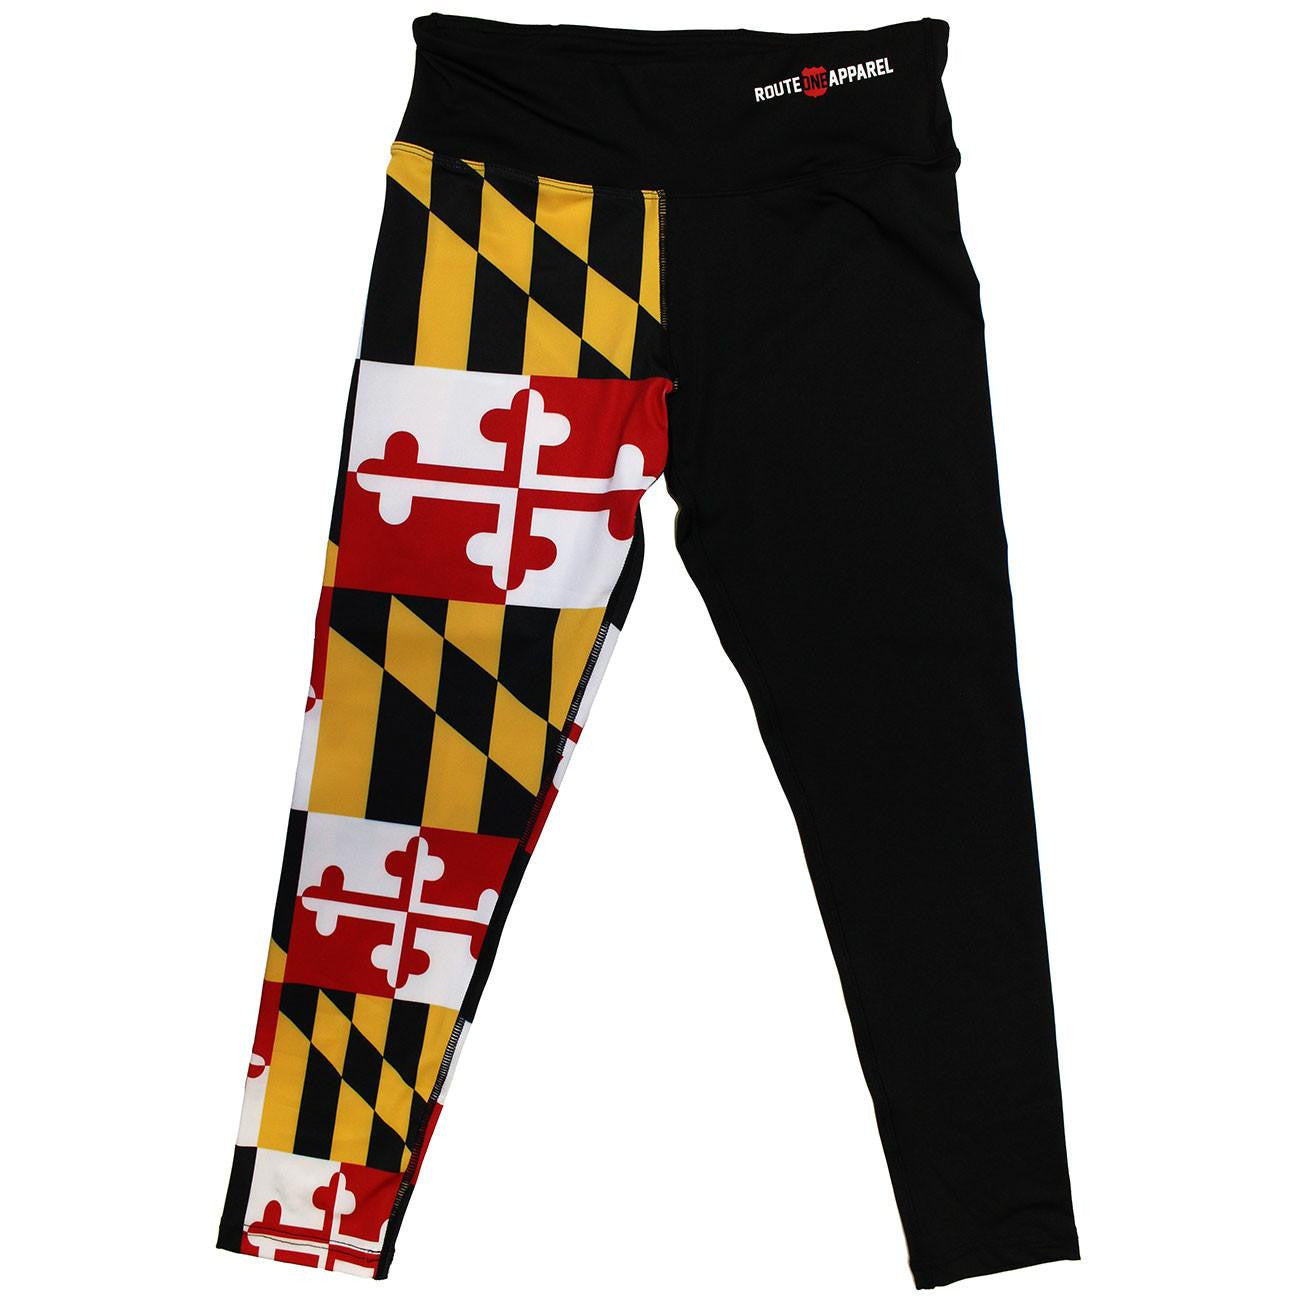 Maryland Flag Half Side (Black) / Workout Capris - Route One Apparel